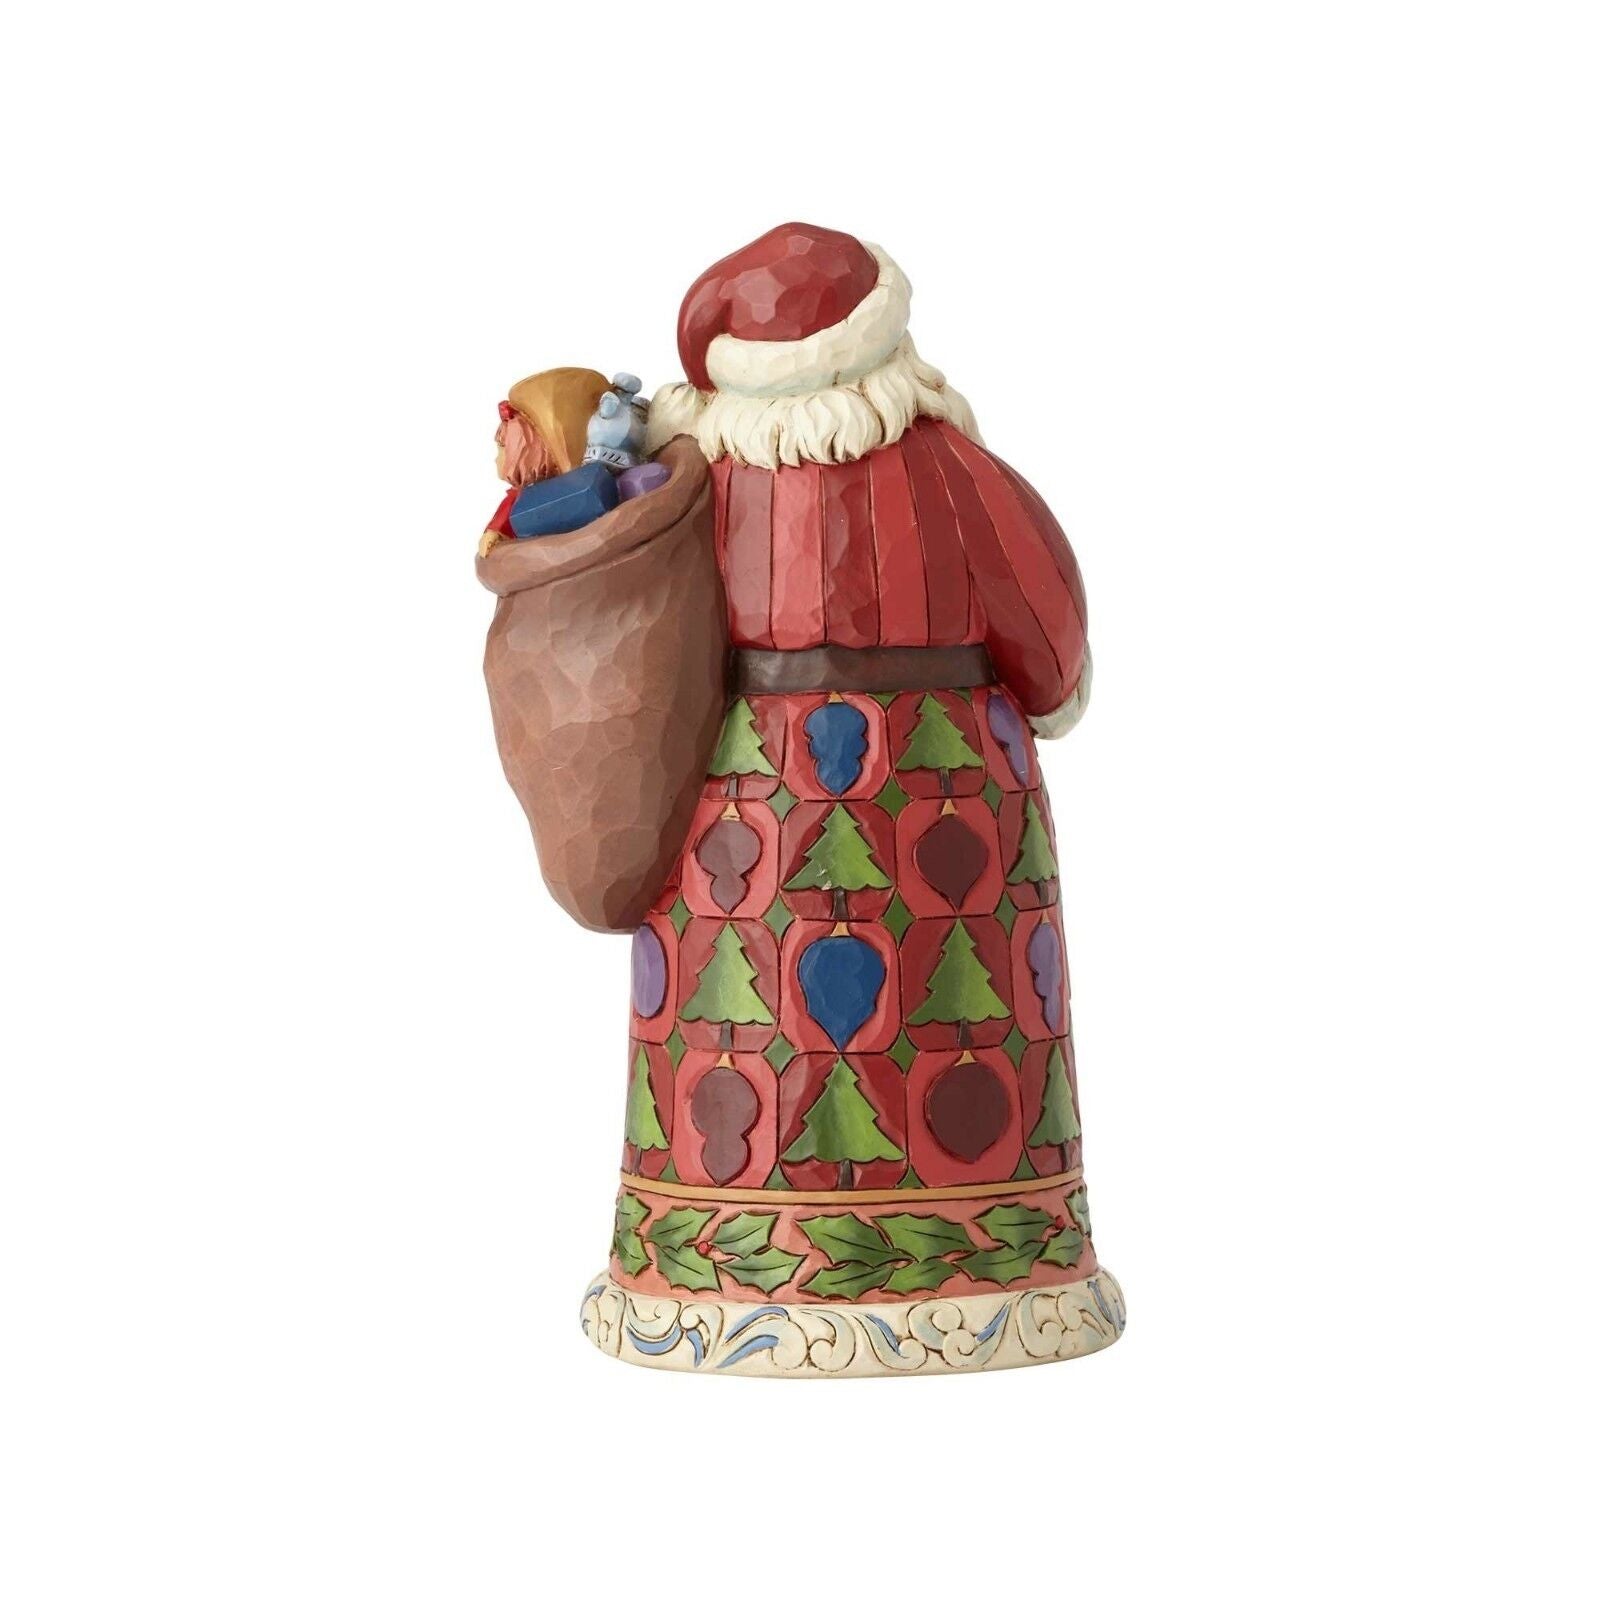 Unboxed - Heart of Christmas God Jul Santa Figurine by Enesco 